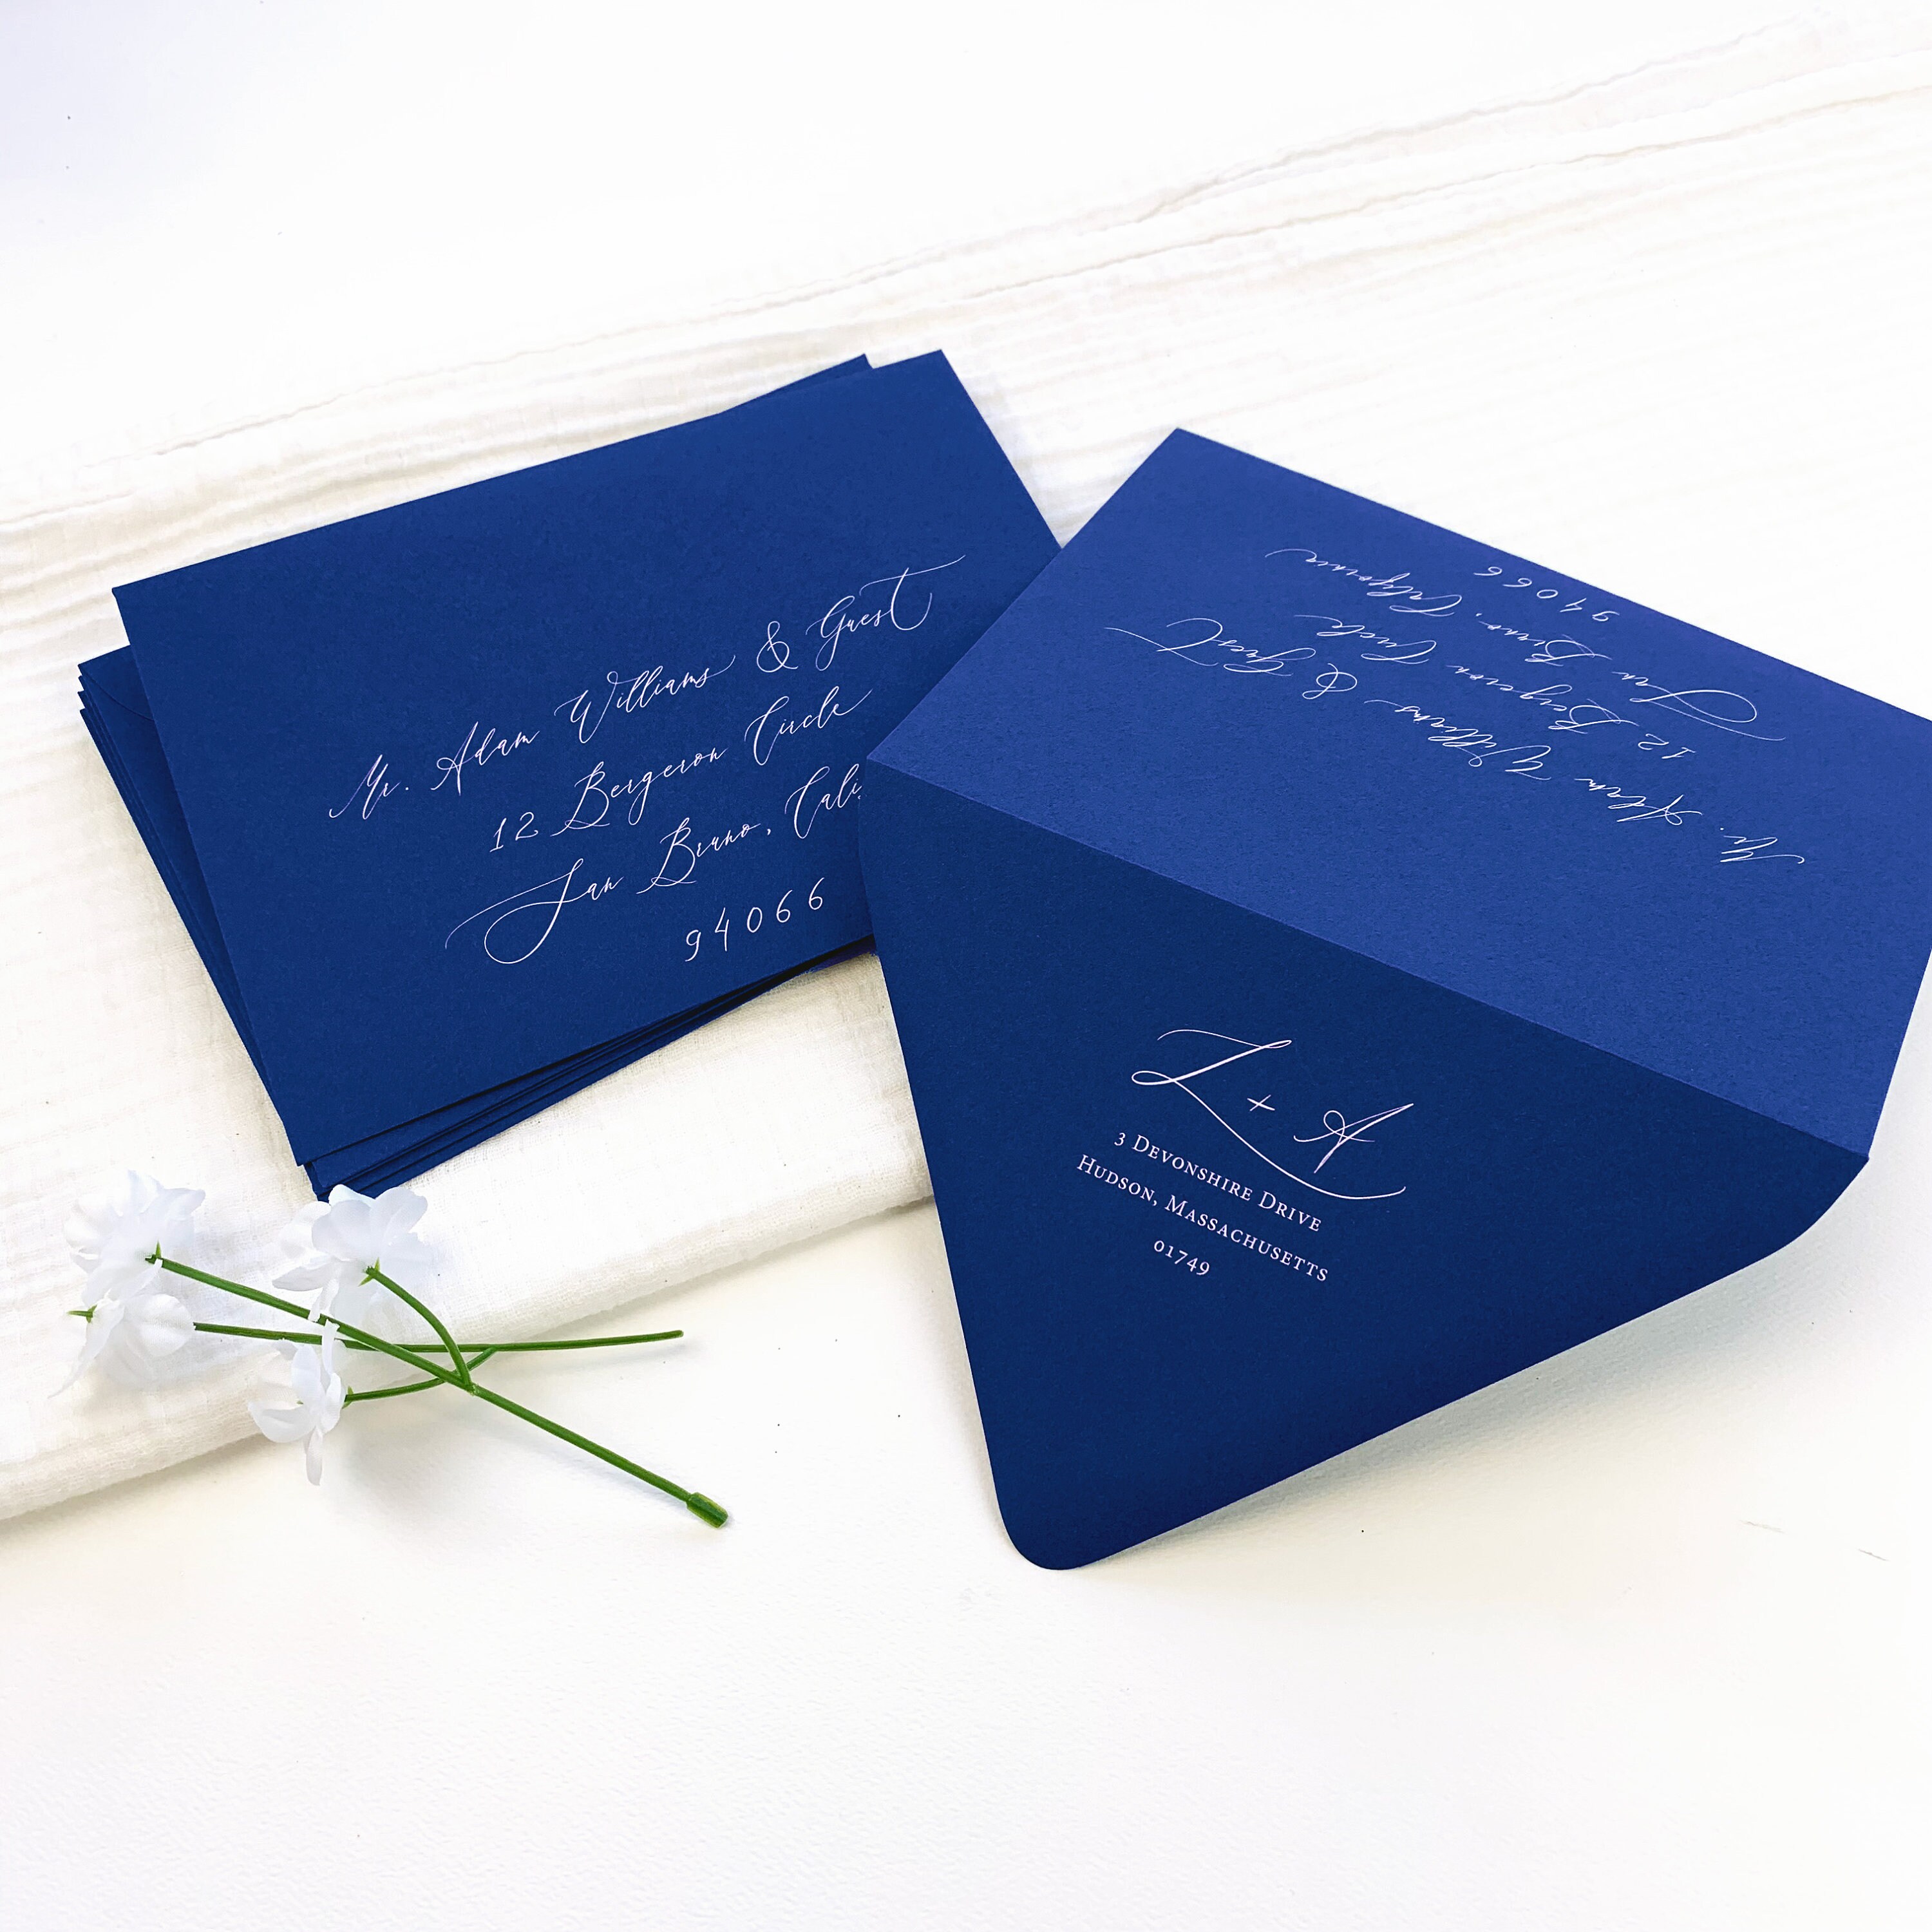 50 Pack Gold Glitter A7 Invitation Letter Envelopes for Wedding, Bulk Mailers (5x7 in)